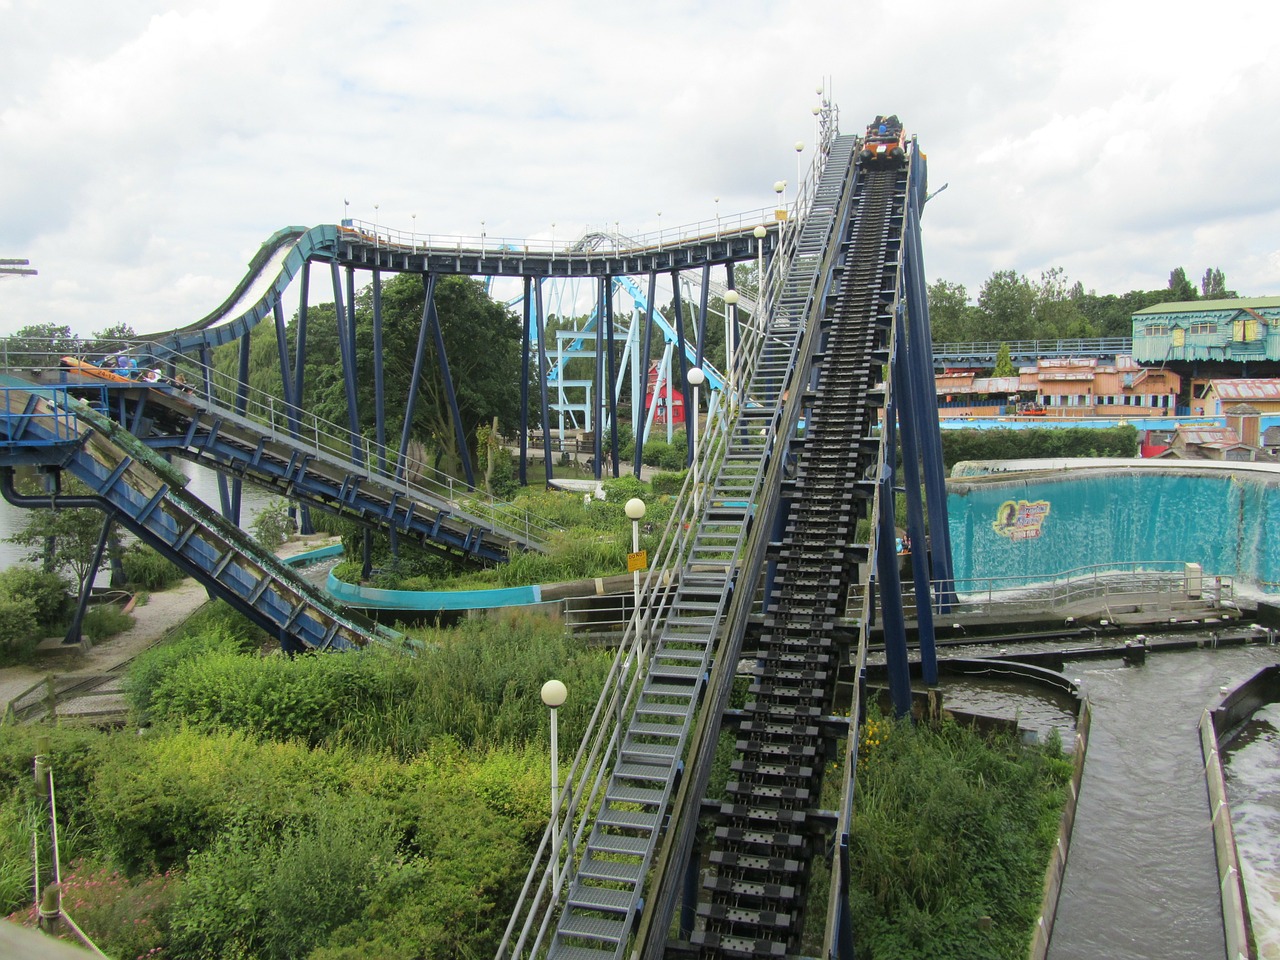 theme park roller coaster rides free photo